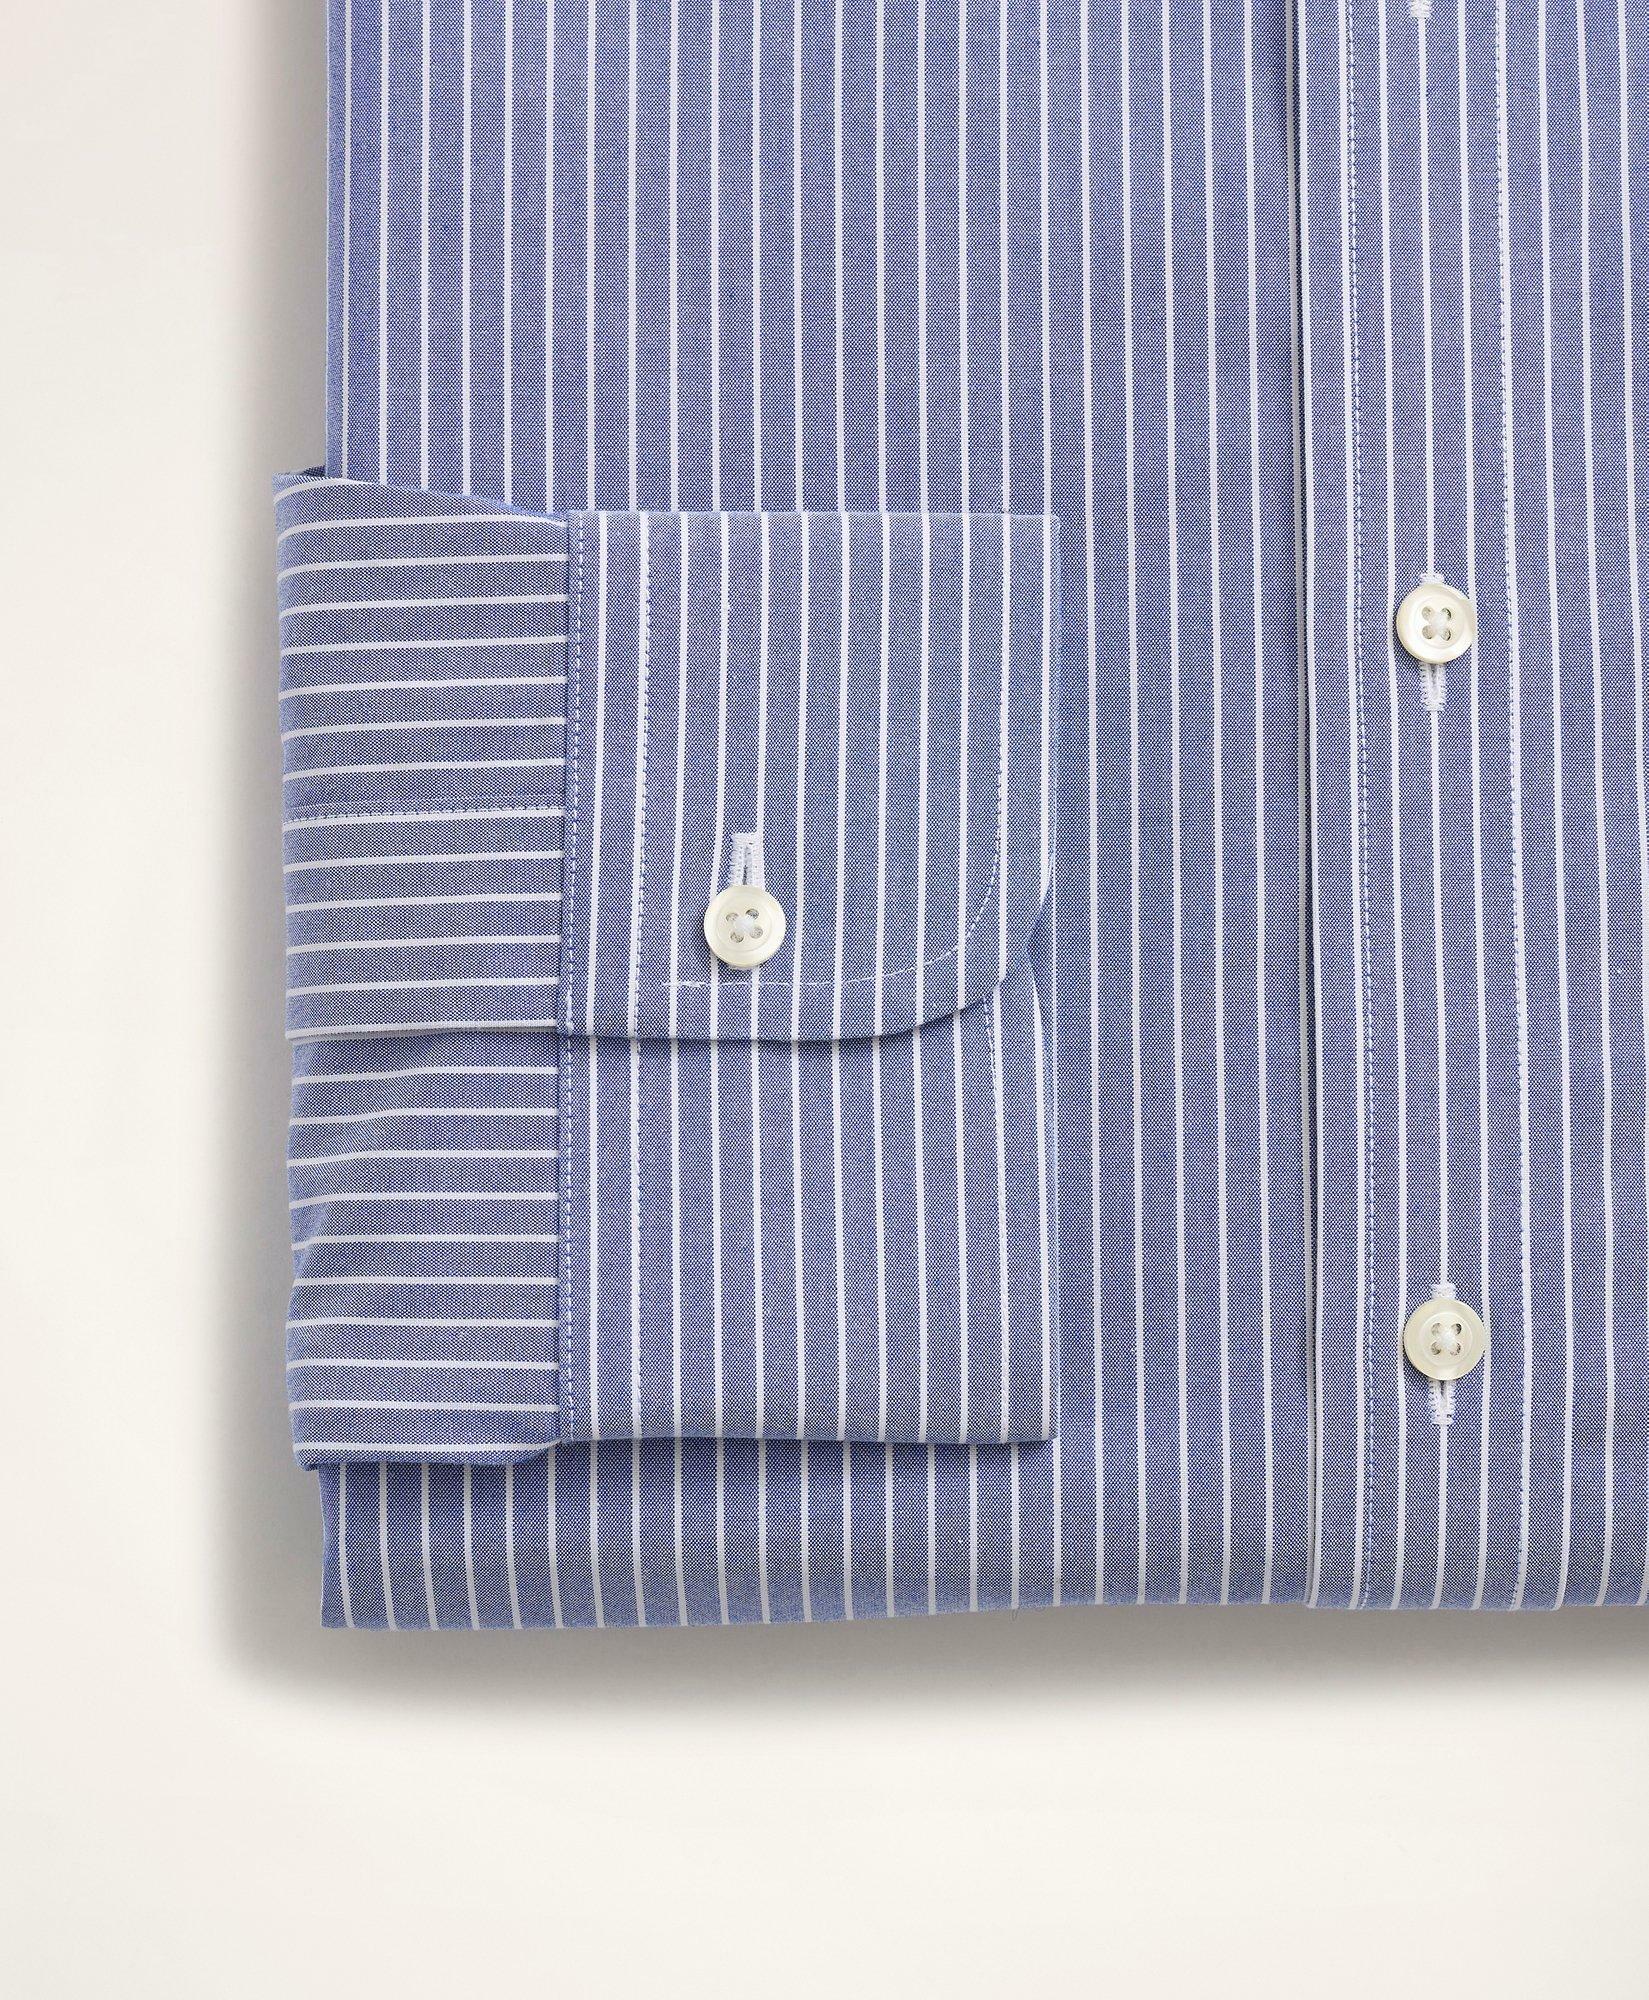 Brooks Brothers Men's Stretch Regent Regular-Fit Dress Shirt, Non-Iron Poplin Button-Down Collar Ground Stripe | Blue